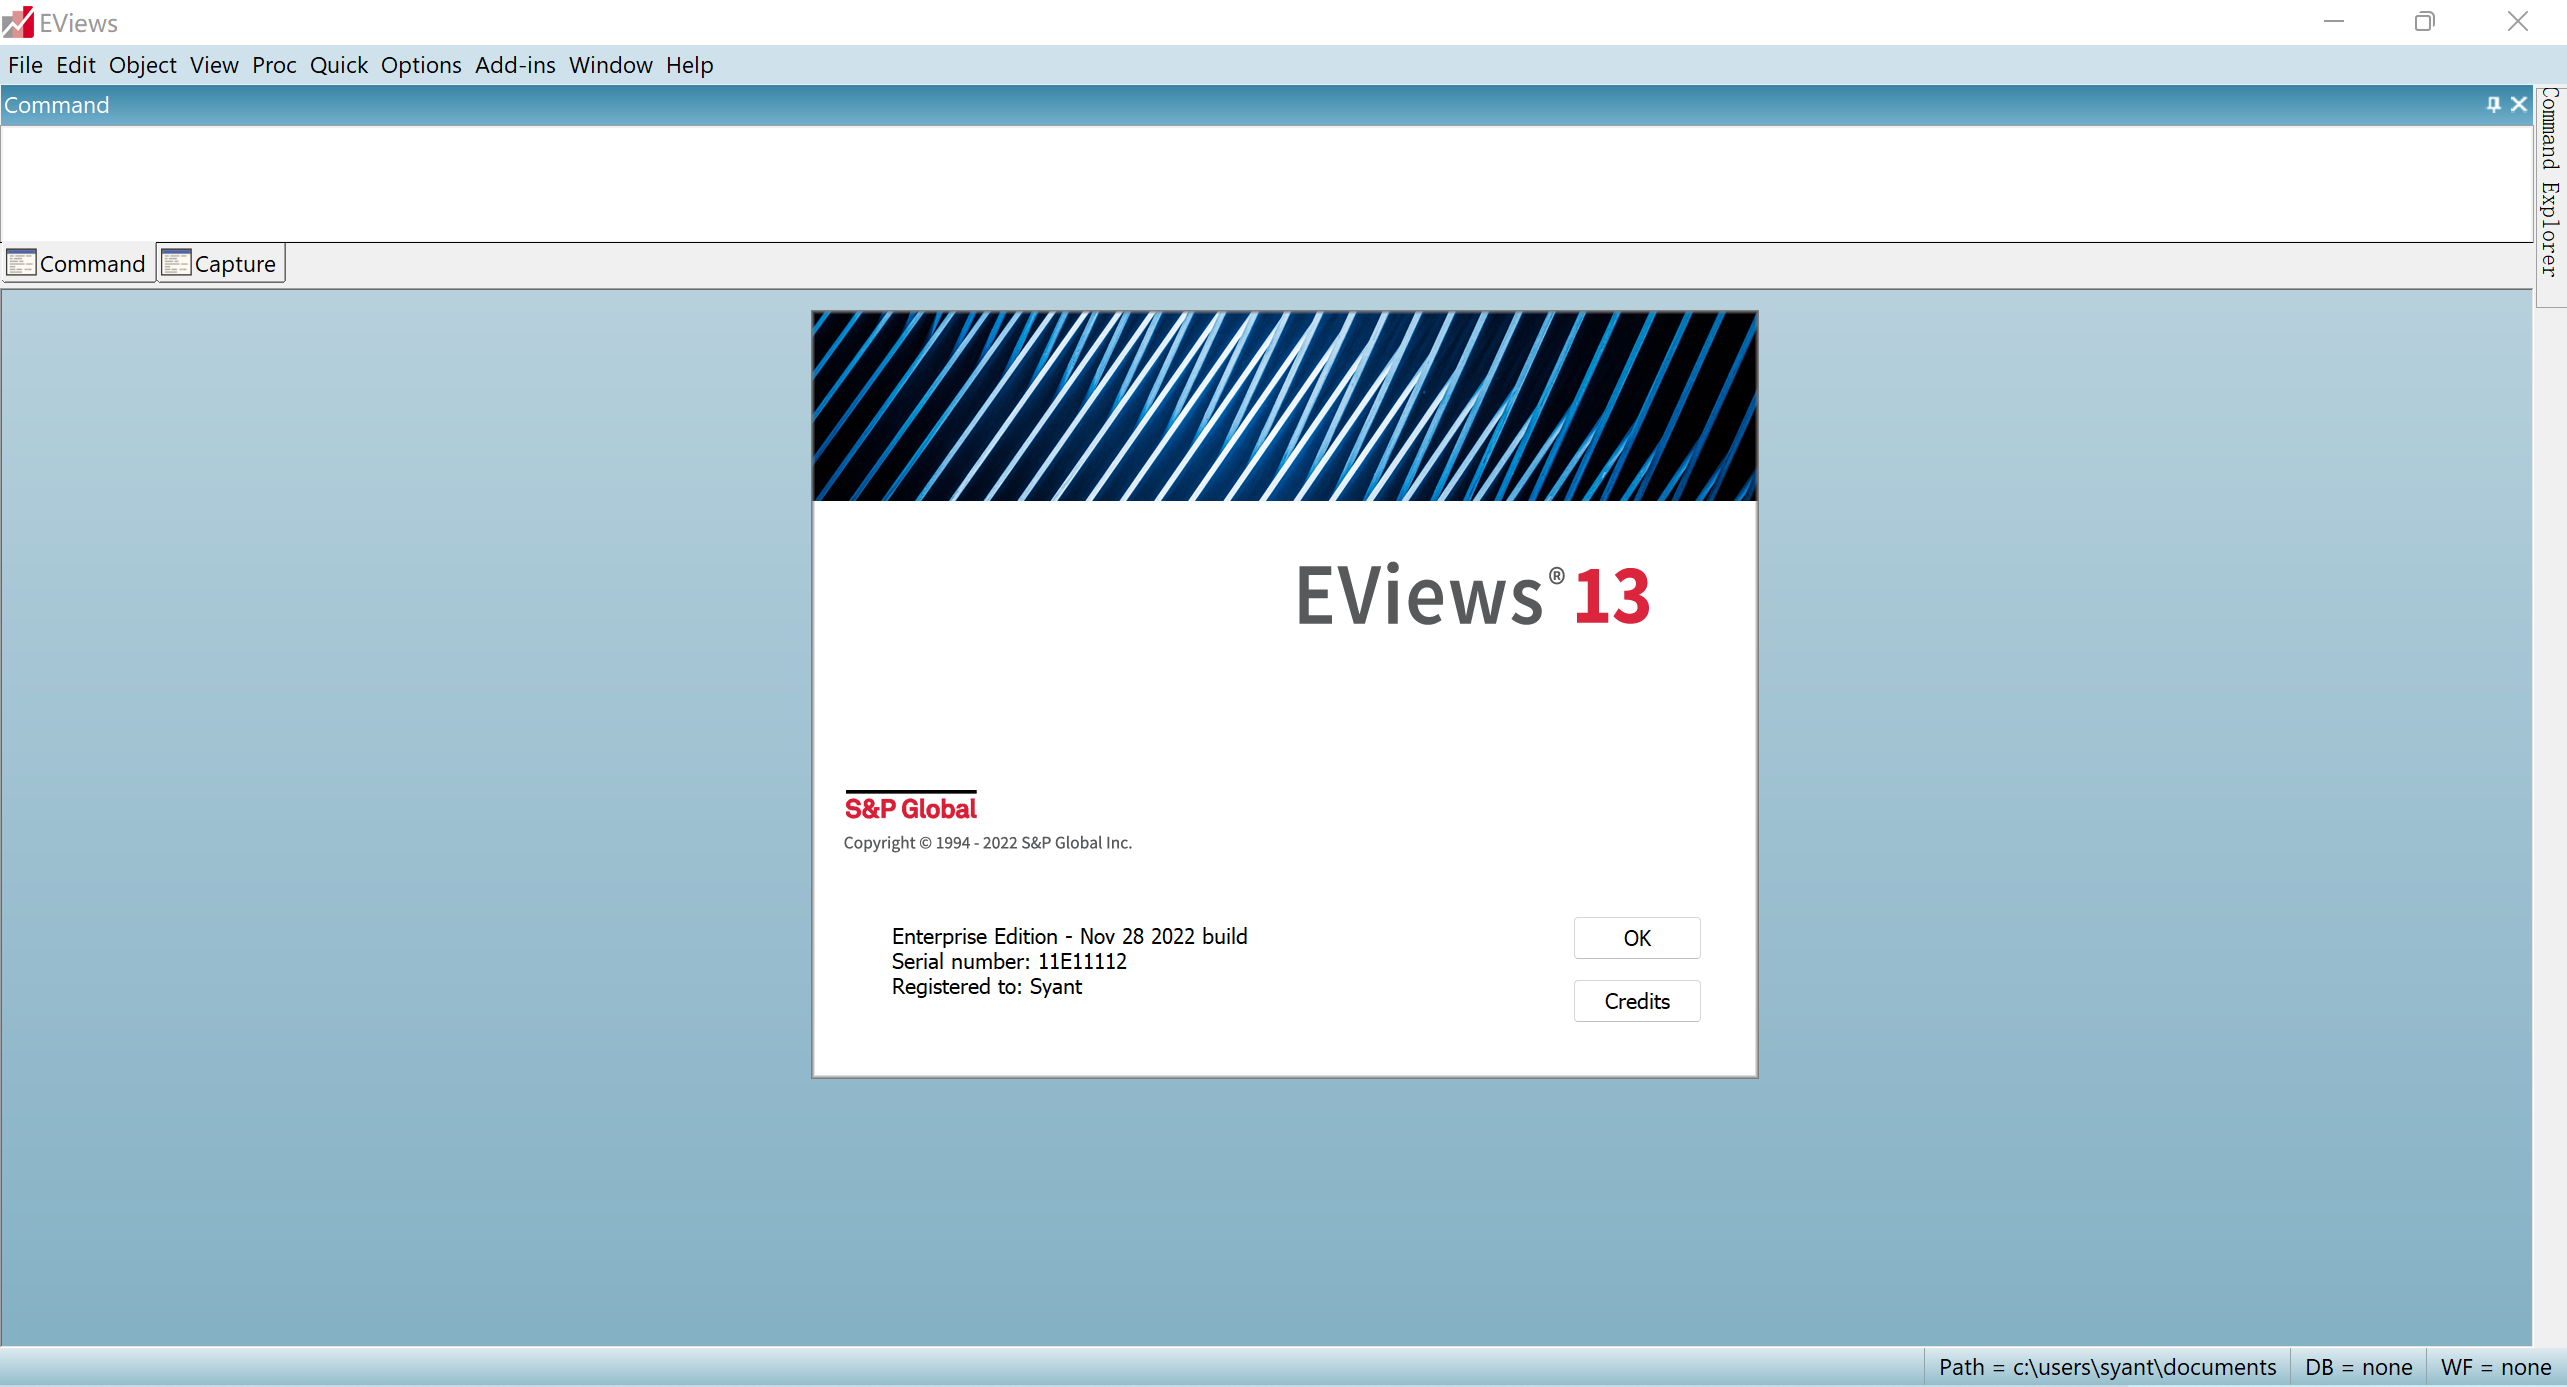 计量经济学 IHS EViews Enterprise Edition 13.0 Build 2022-11-28 x64